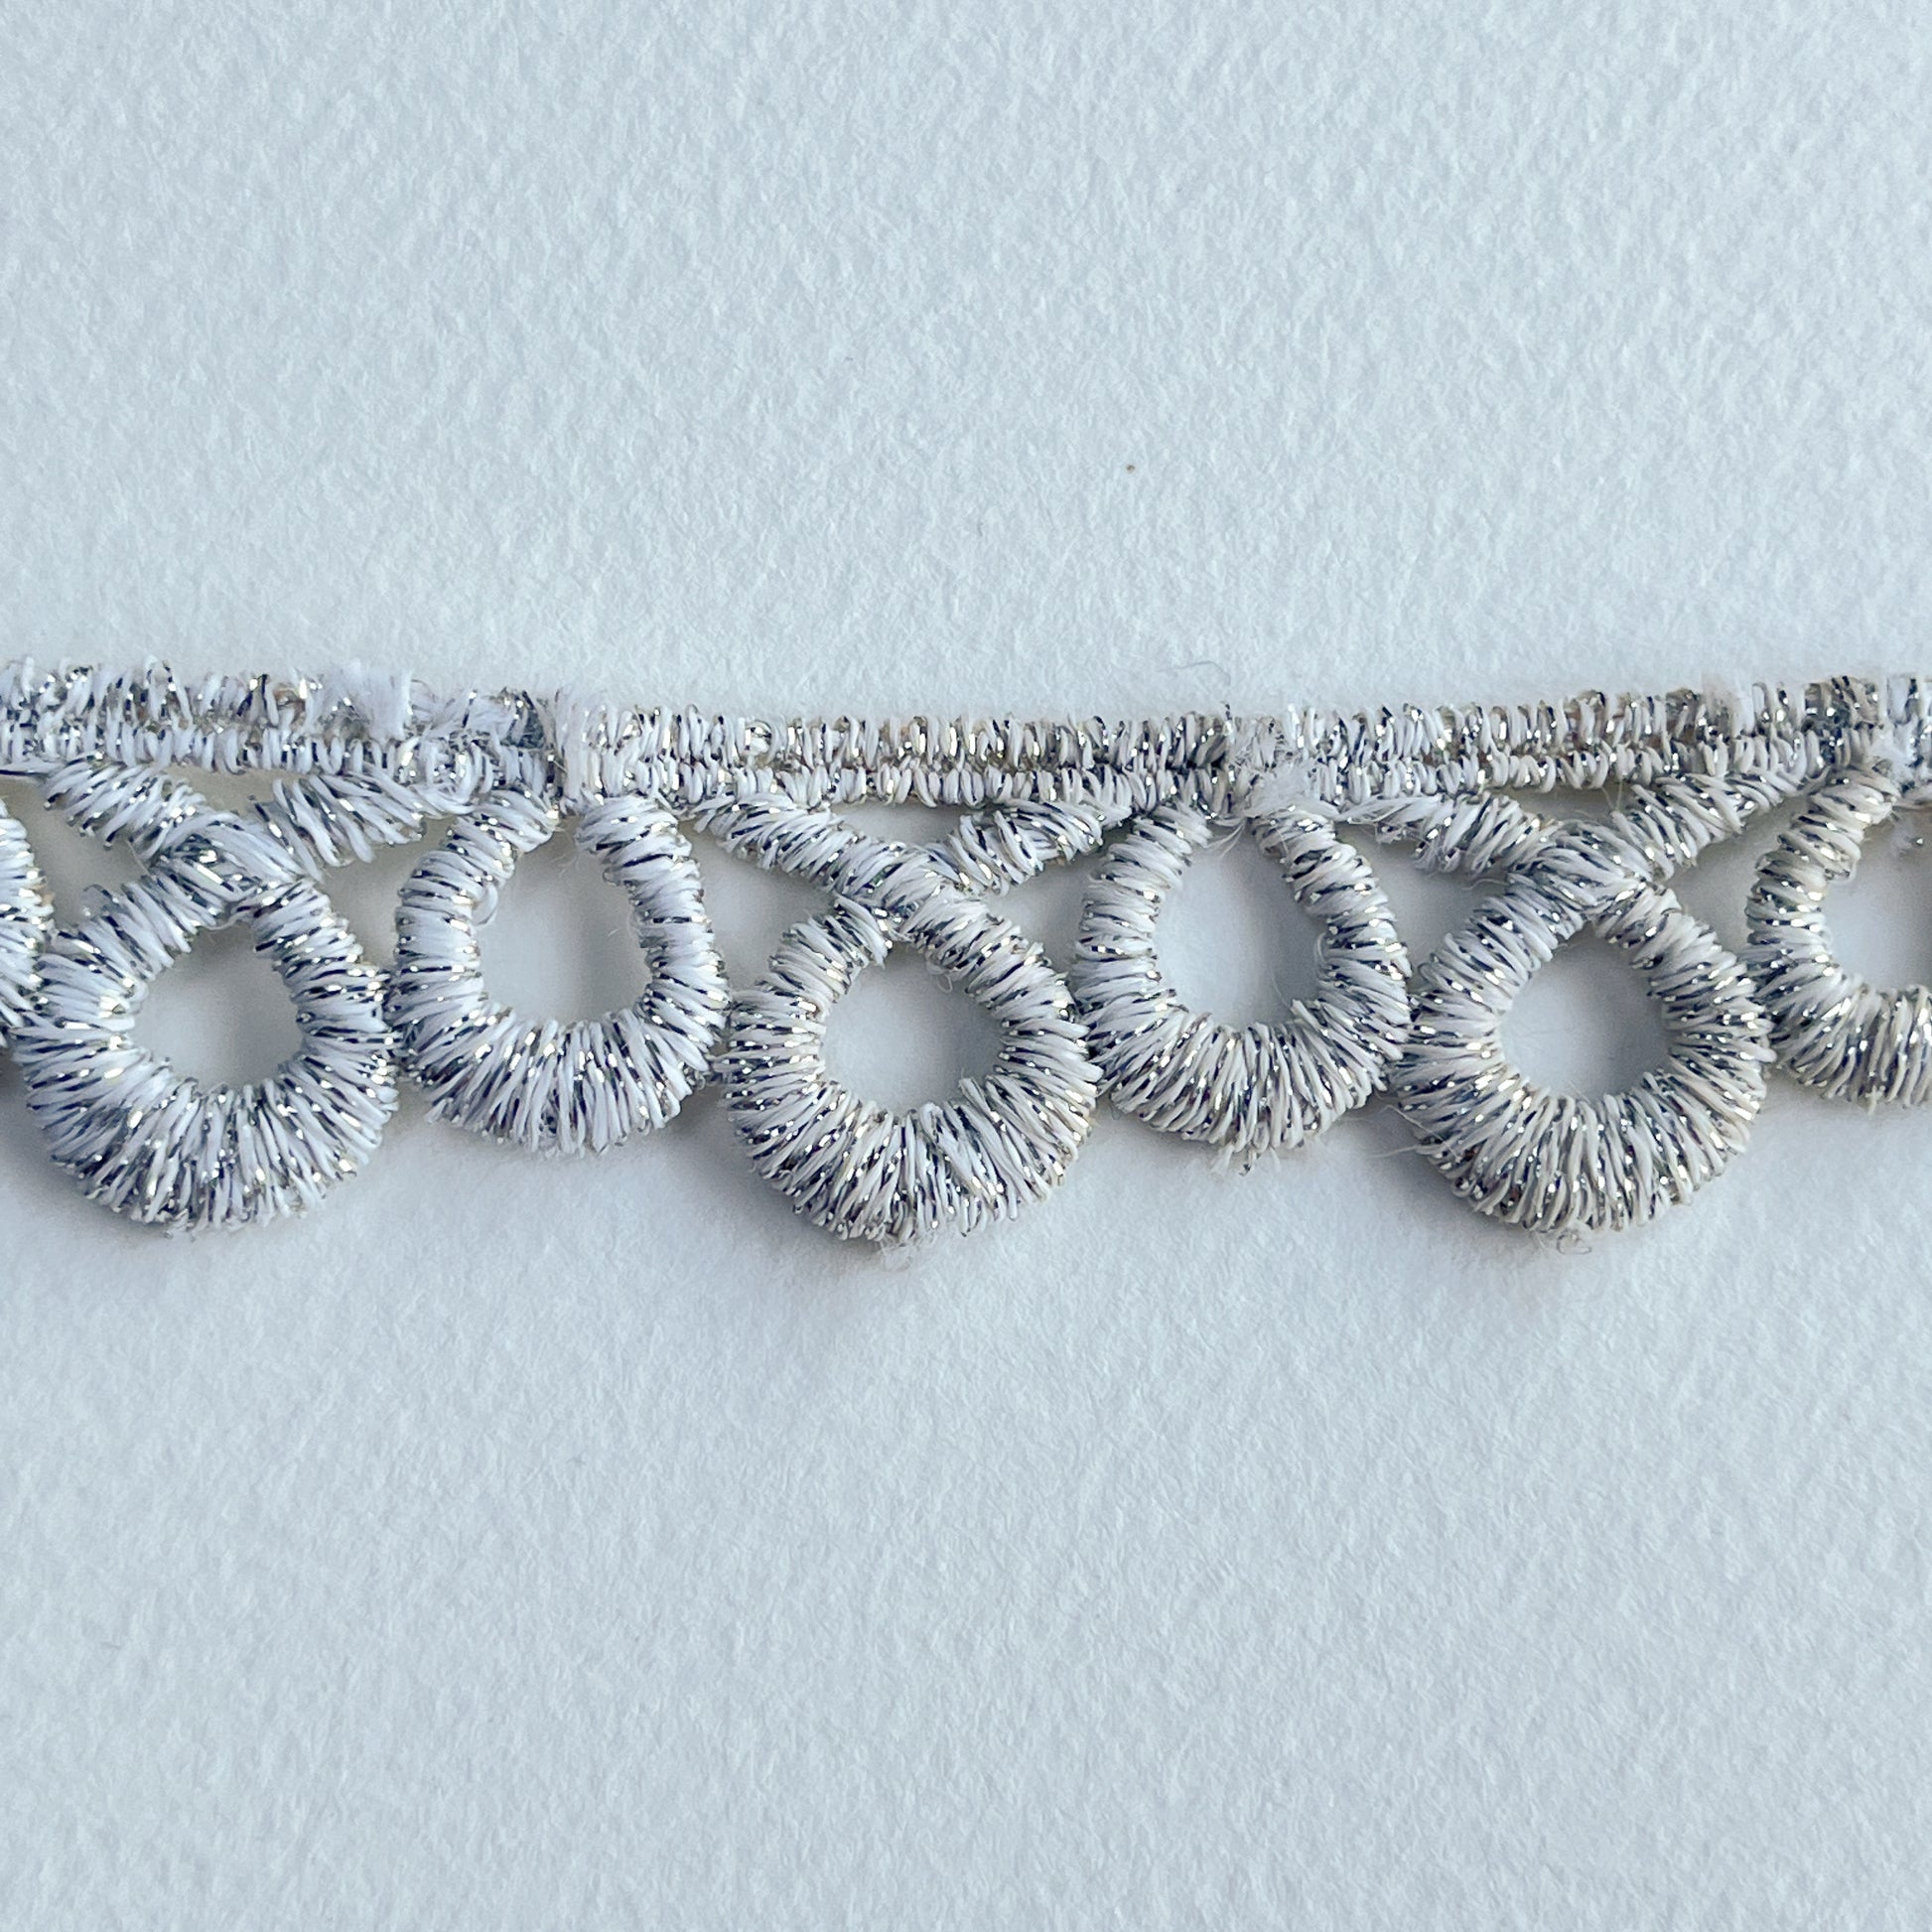 Lurex Guipure Lace Trim - silver. Luxury lurex lace edging trim with elegant loop design